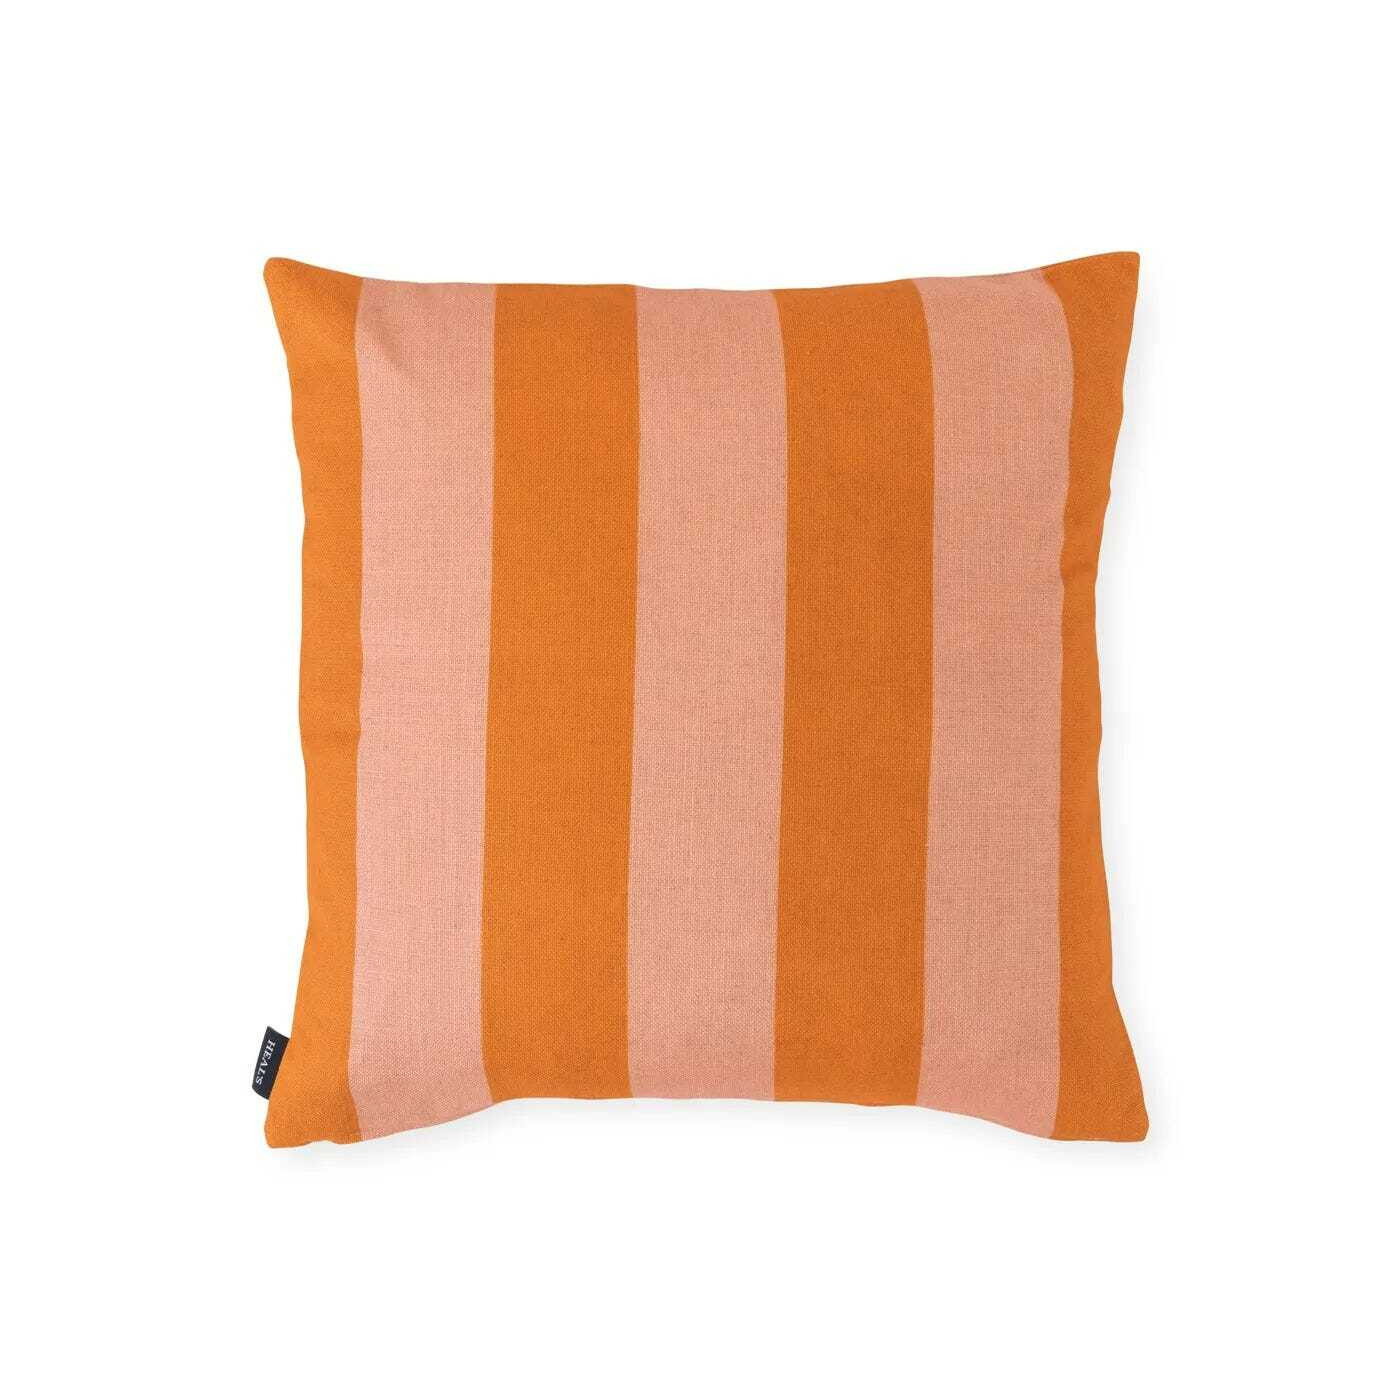 Heal's Cabana Stripe Cushion Orange/Pink 43cm x 43cm